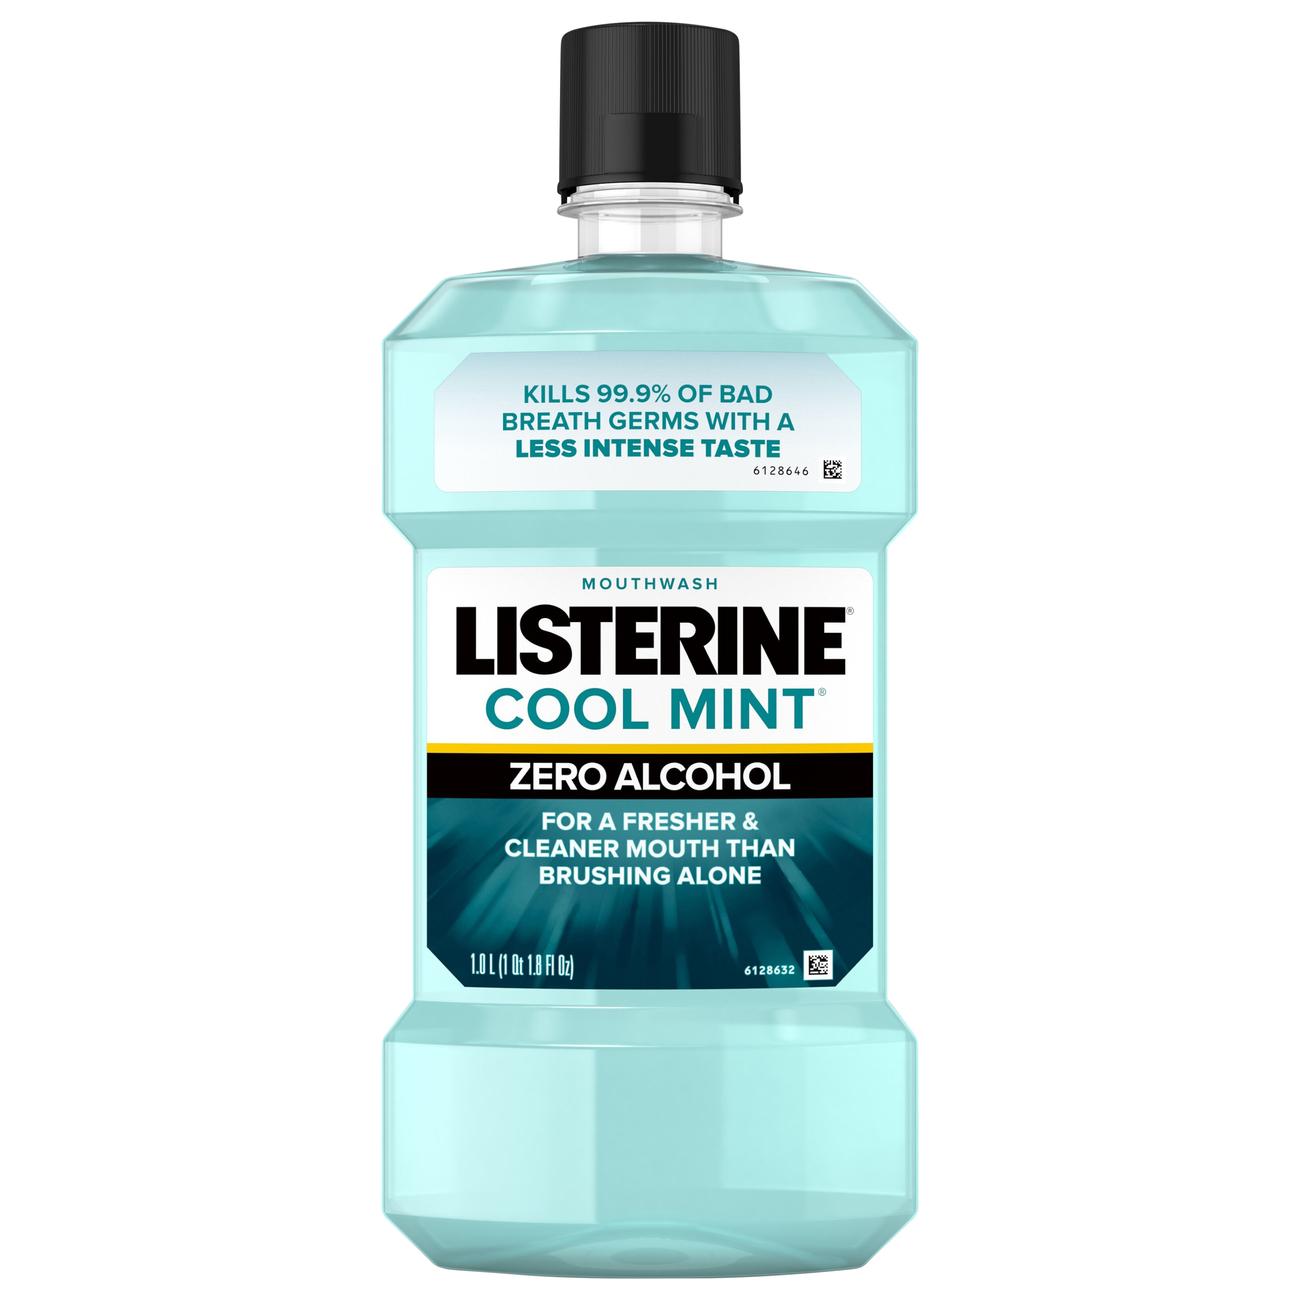 Listerine Cool Mint Zero Alcohol Mouthwash; image 1 of 3